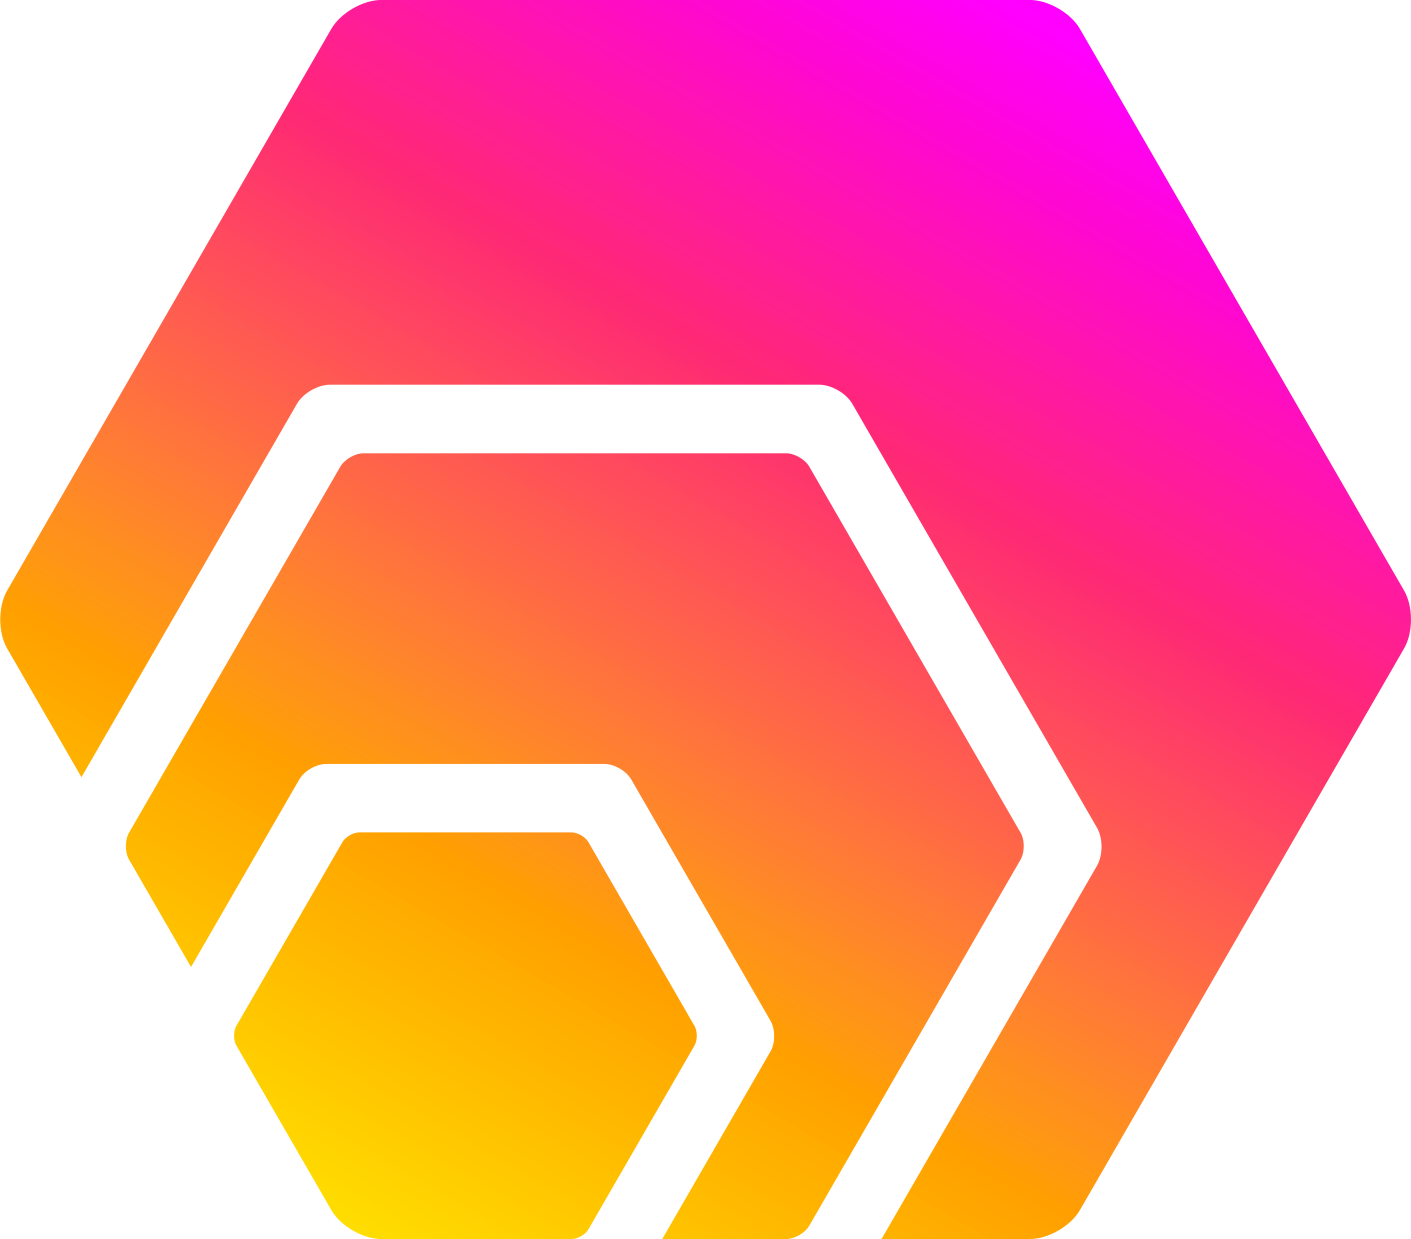 HEX logo